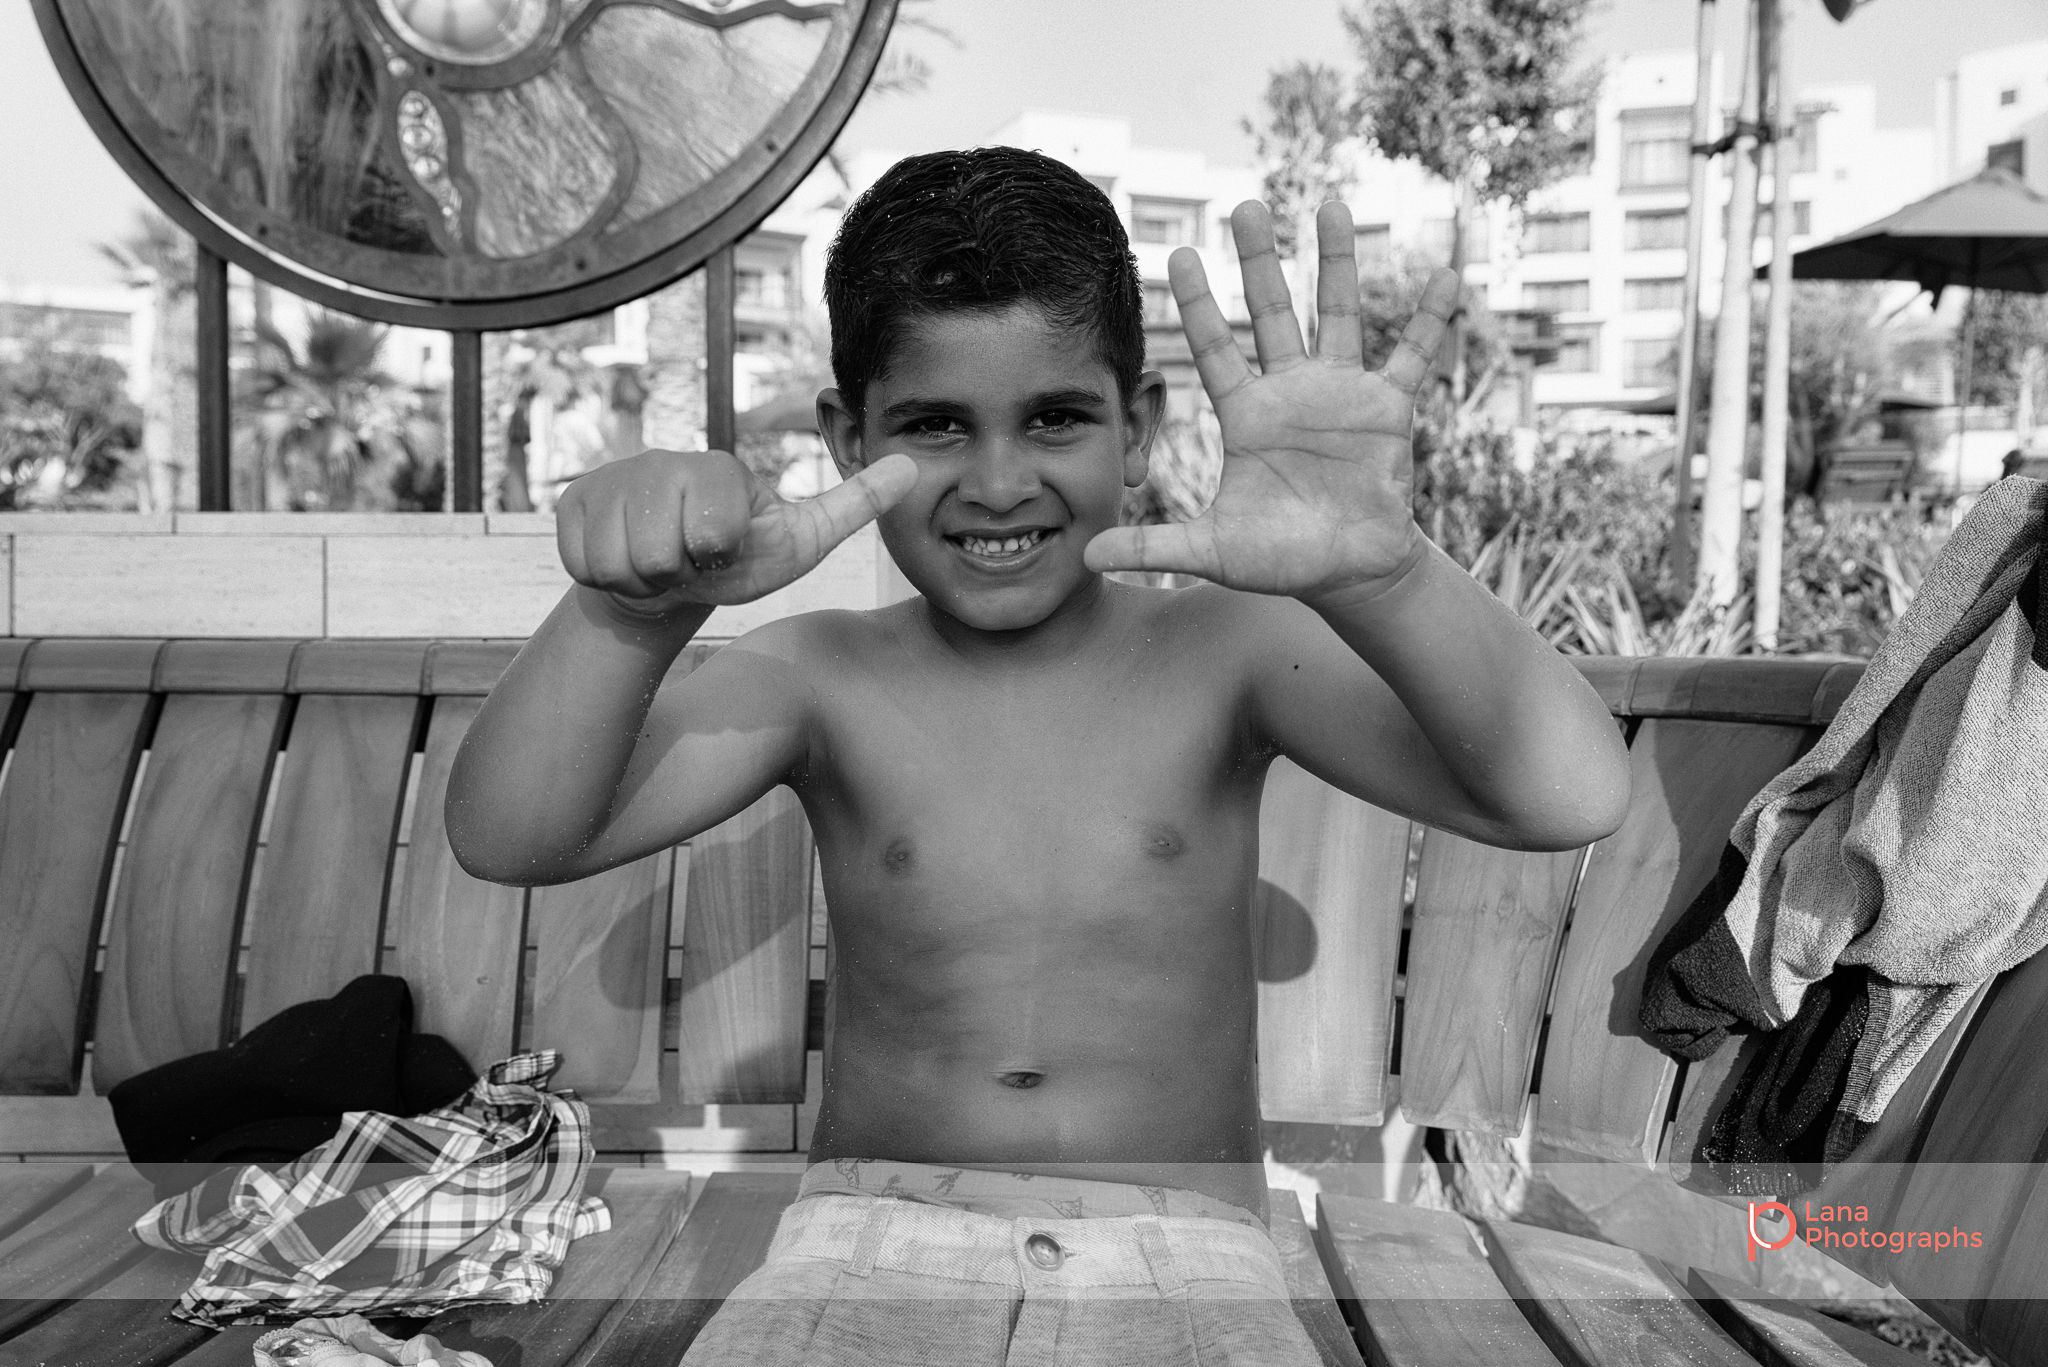  Lana Photographs Dubai Family Photography beach photoshoot boy is six 